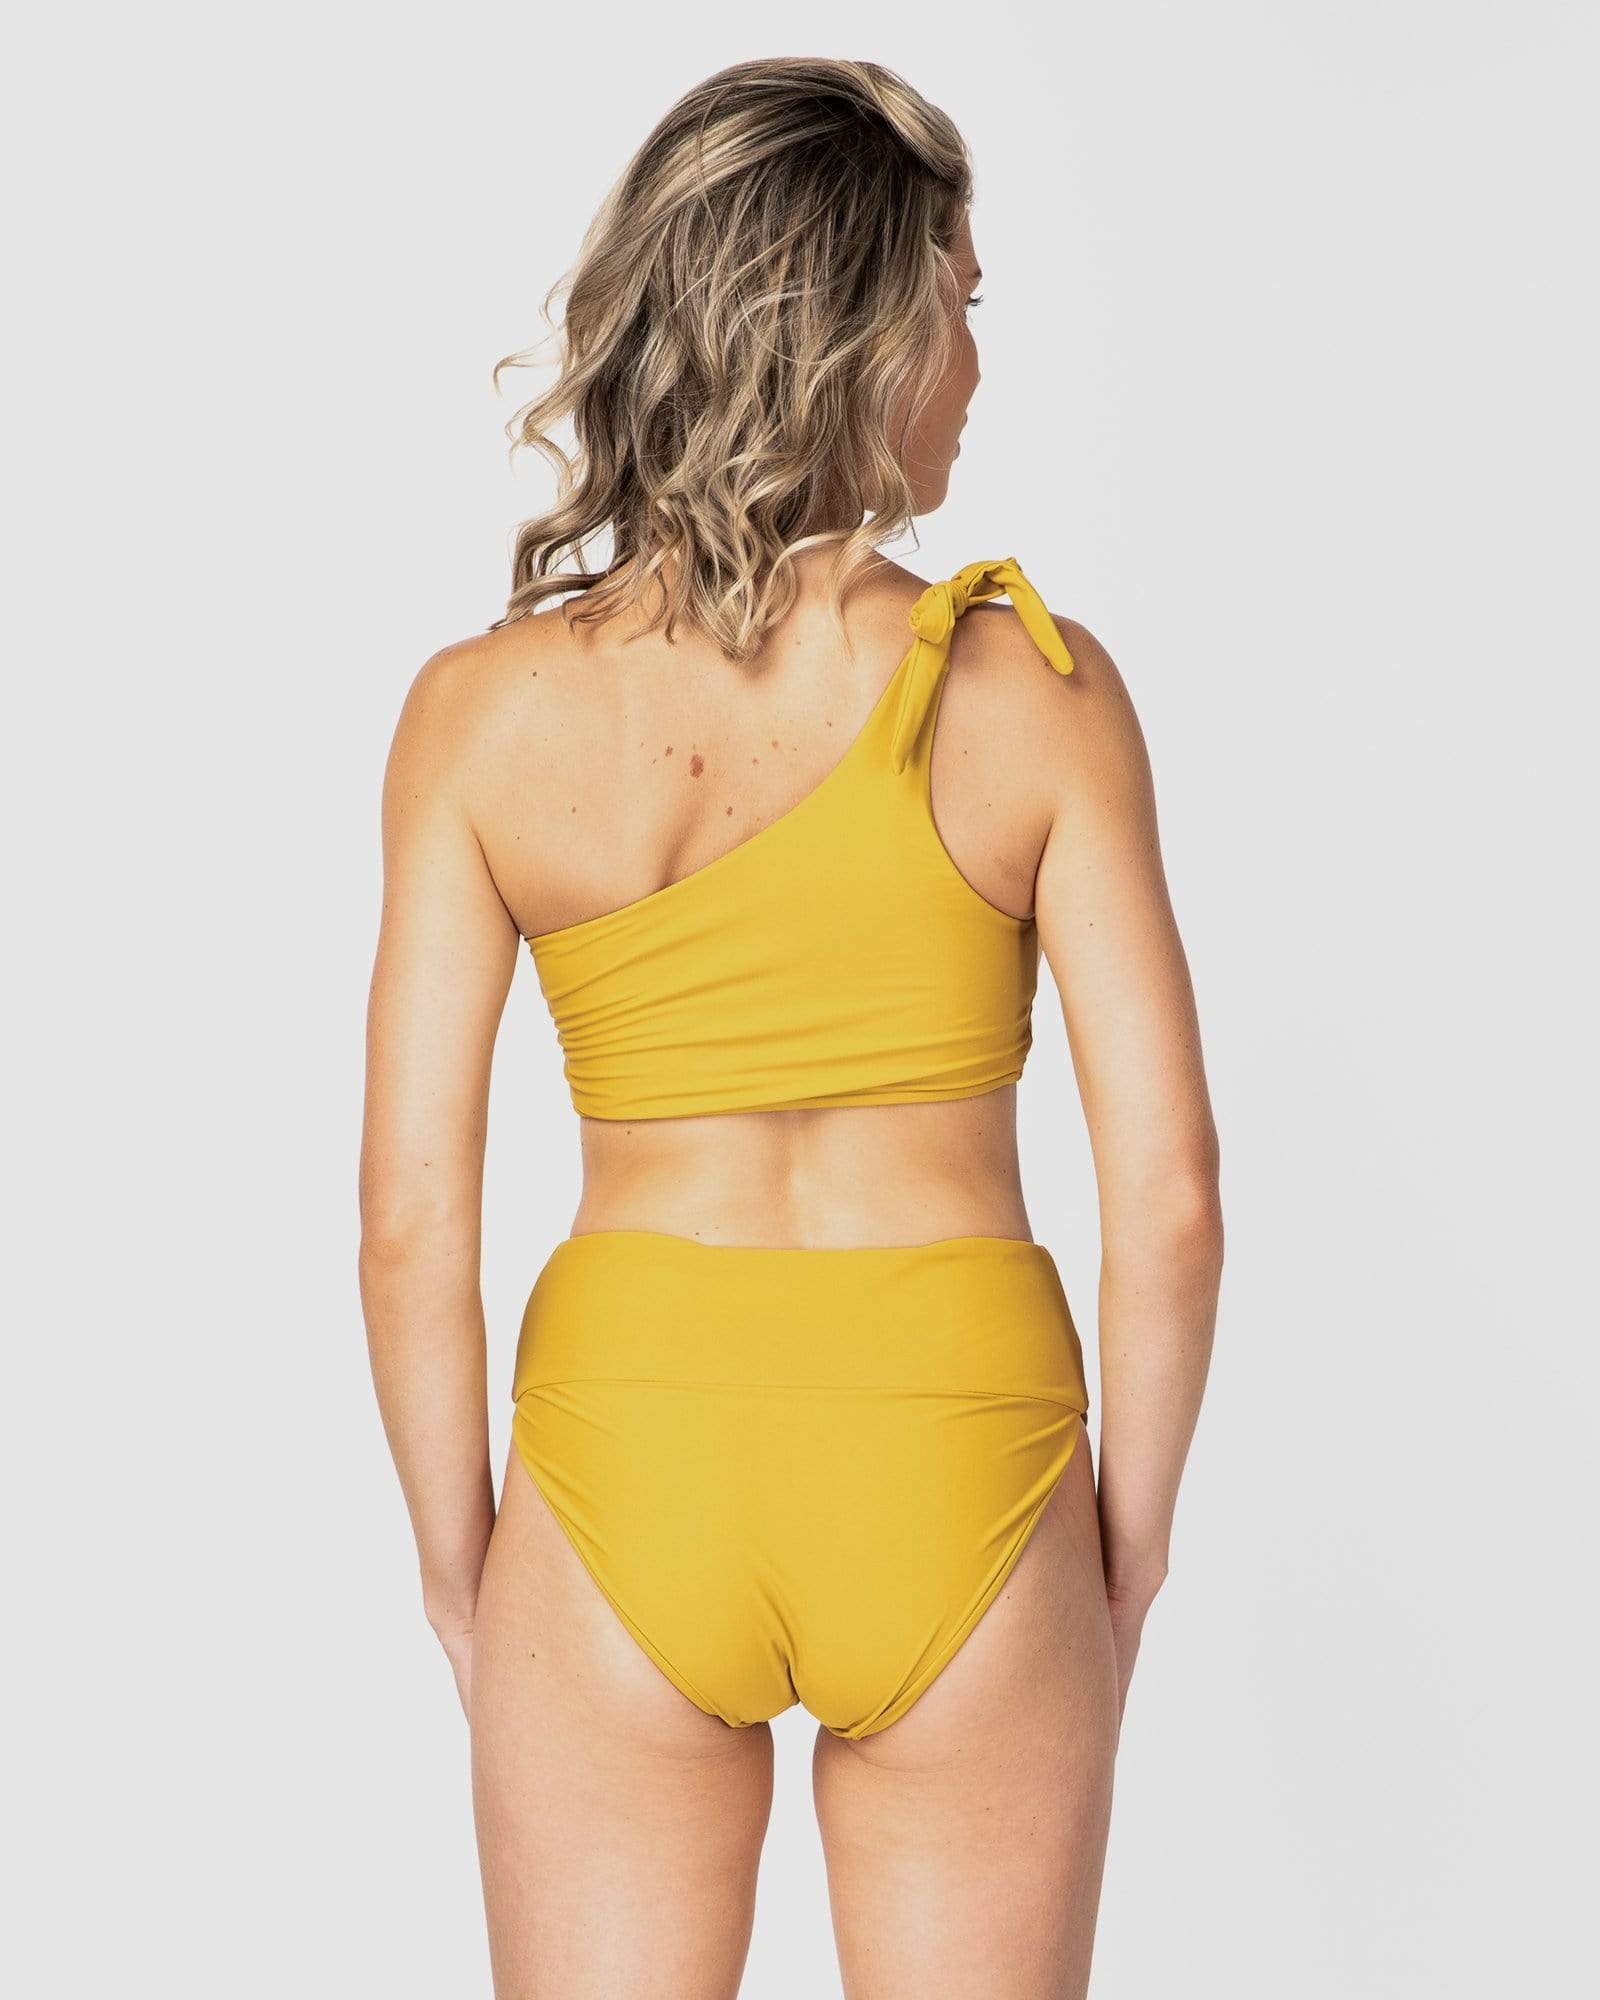 <b>Tulum</b><br>Pineapple Shouldered Top<br>Sustainable Australian Swimwear-Cali Rae-stride